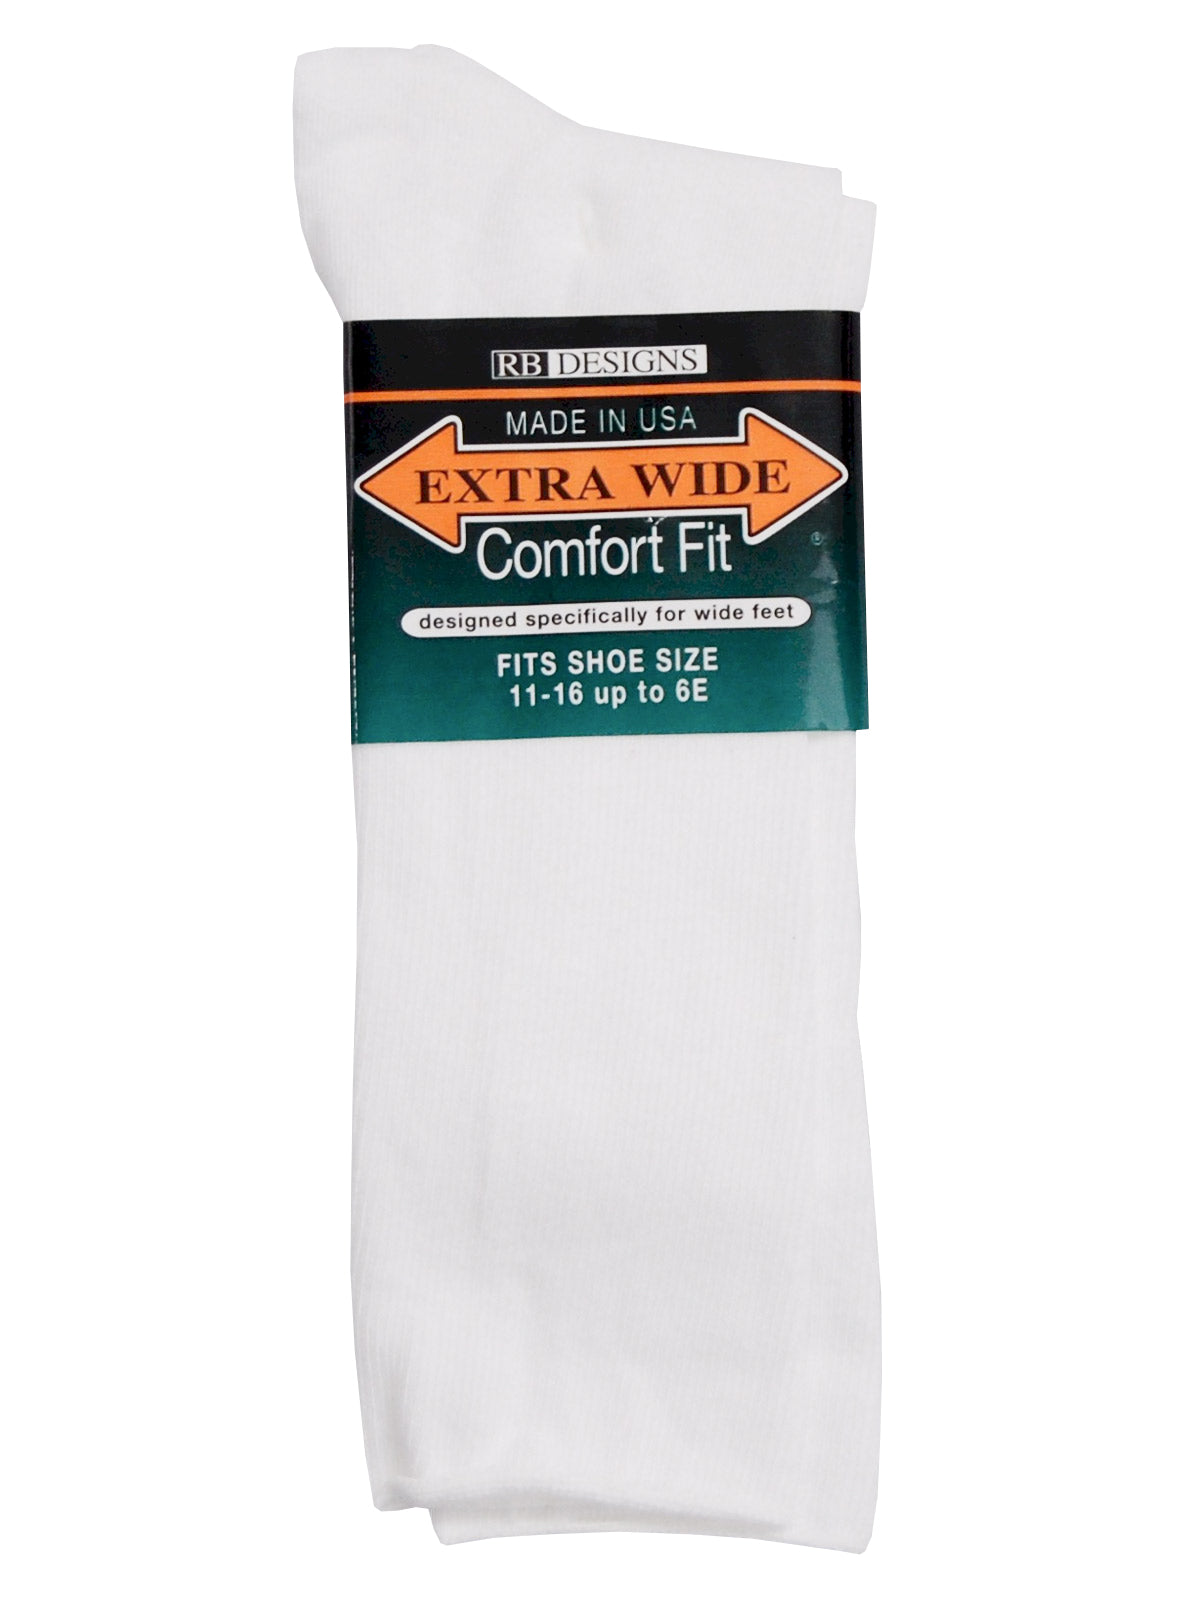 Extra Wide Men's Comfort Fit Dress Socks in White - Size Medium (8.5 - 11.5)